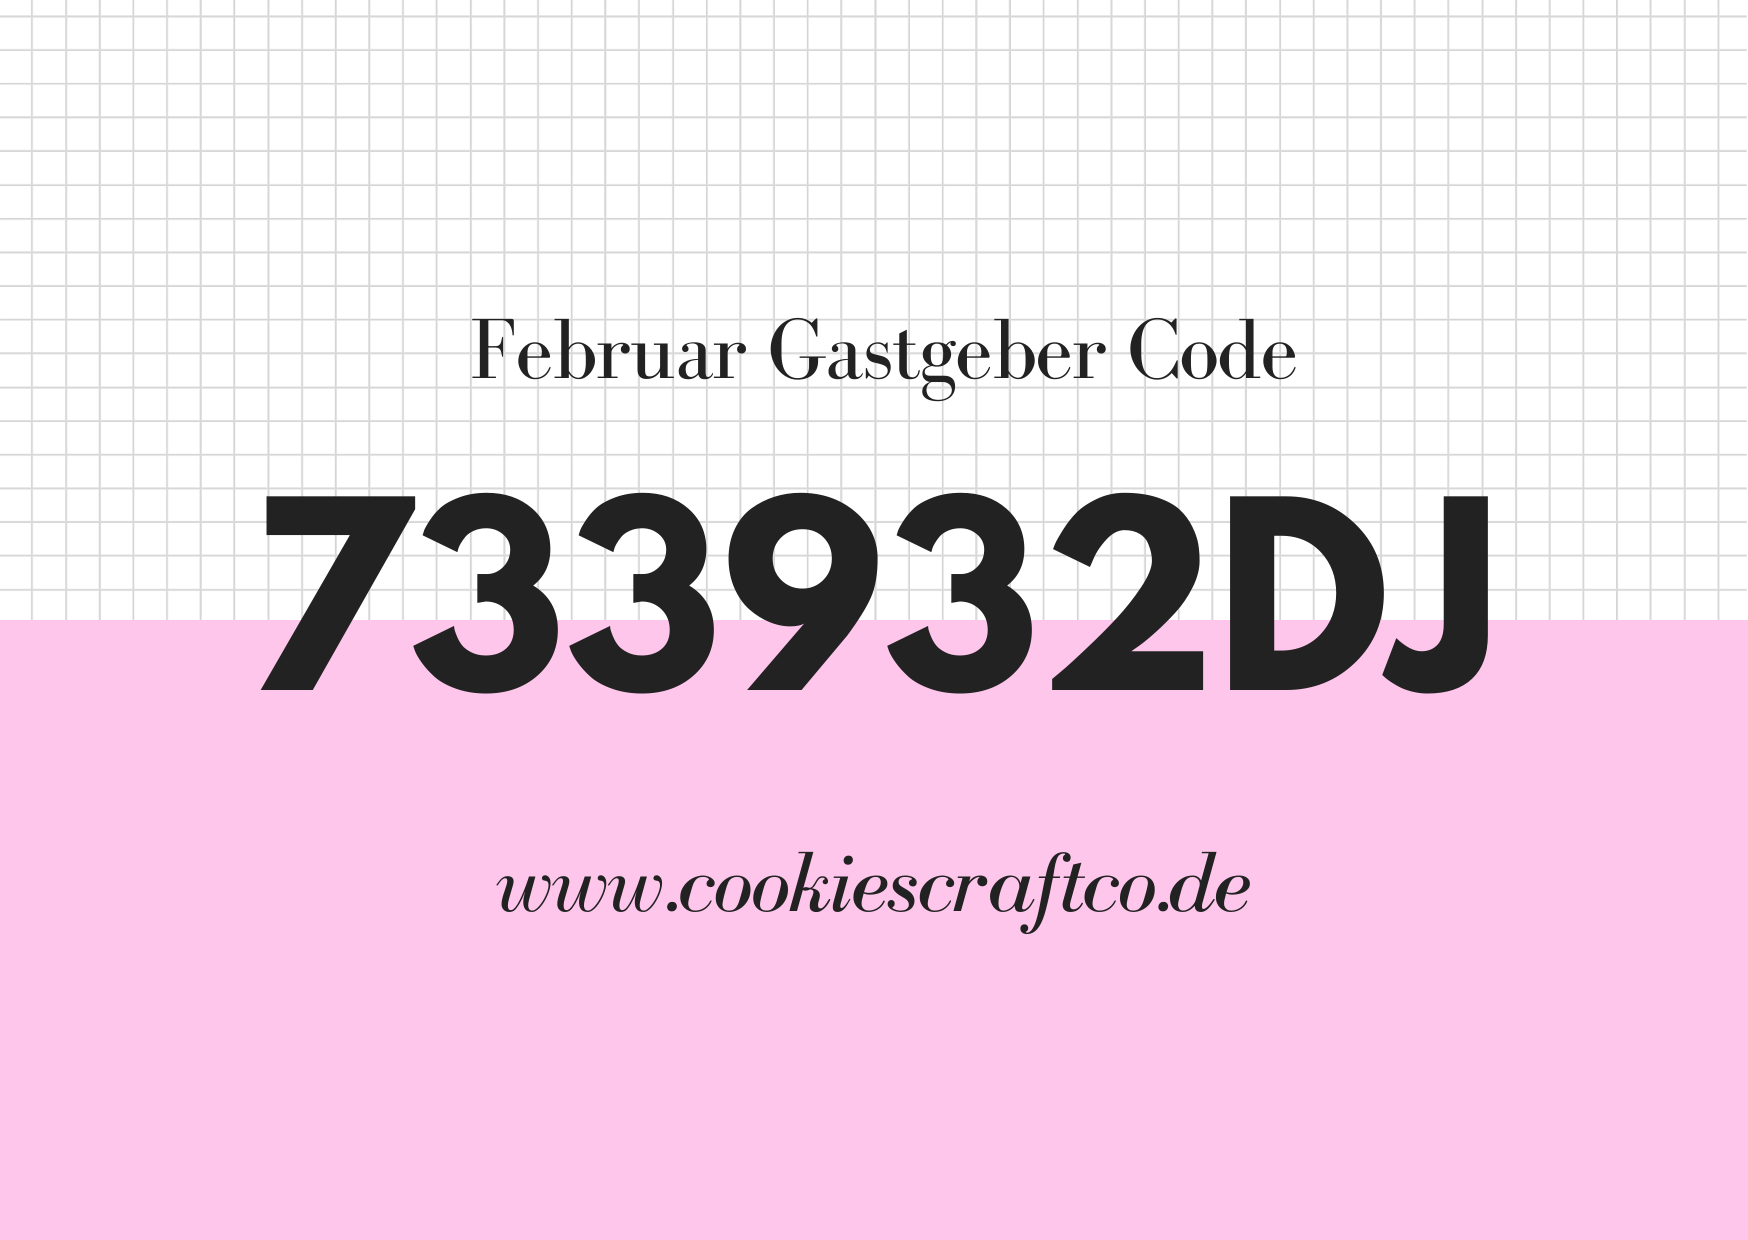 Februar - Gastgebercode 733932DJ